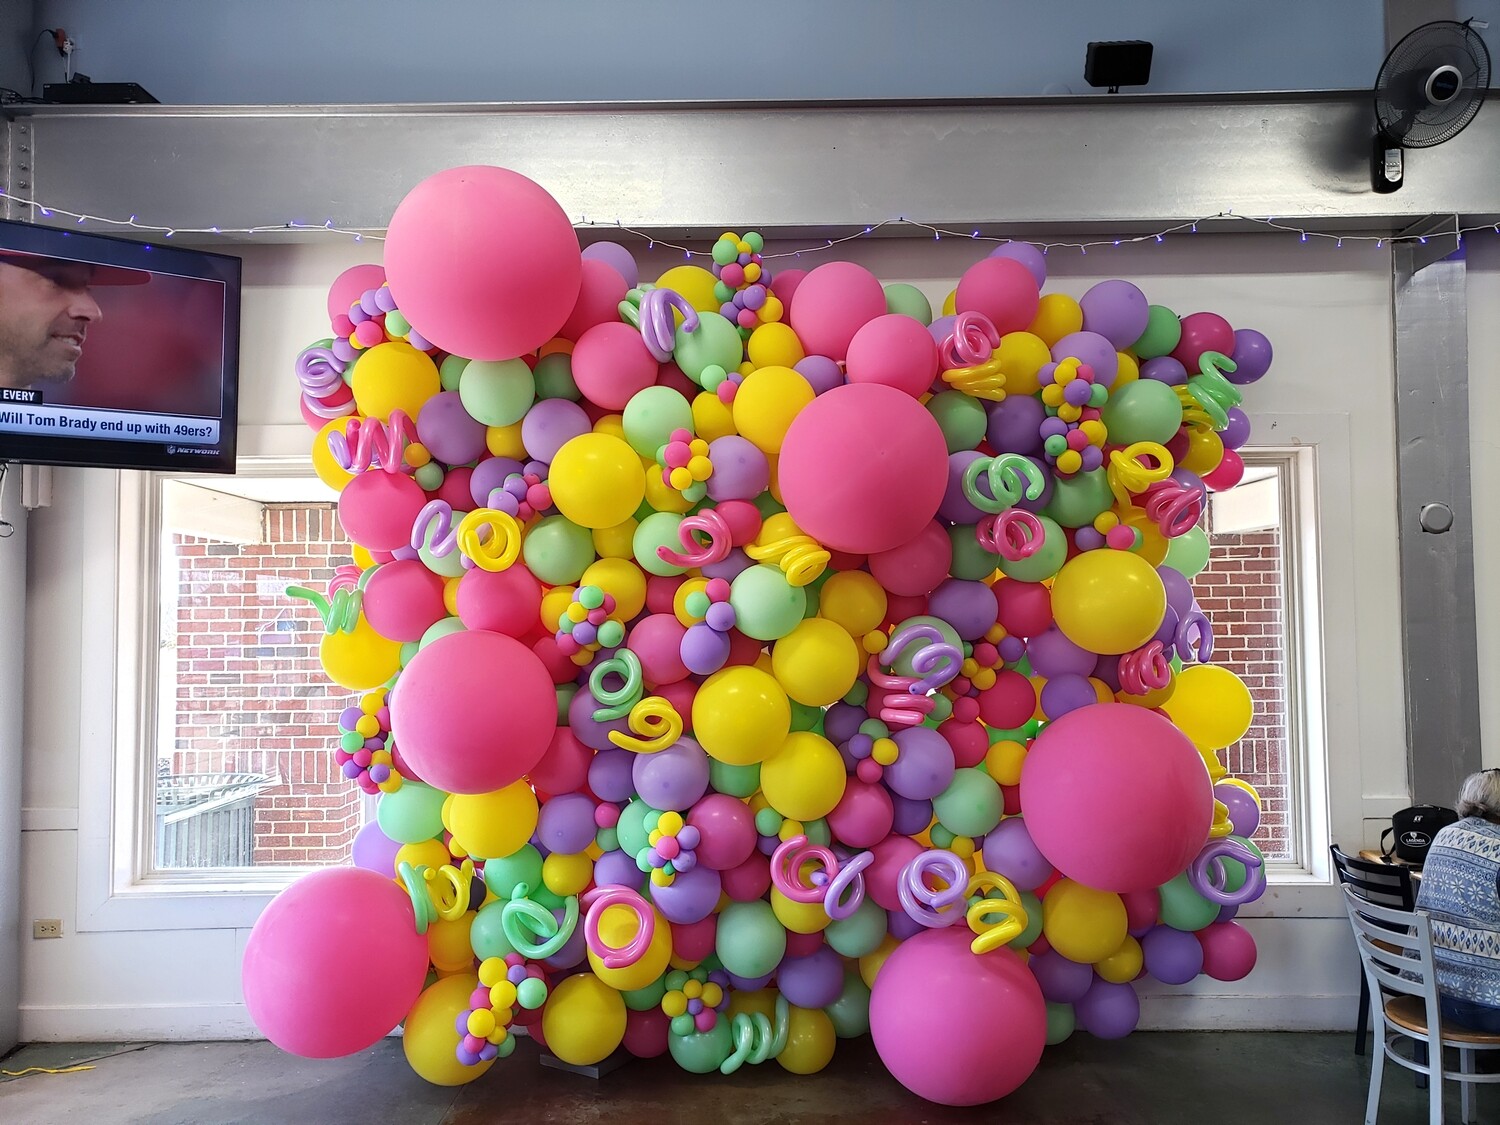 Balloon walls, organic indoors (varying sized bubbles)